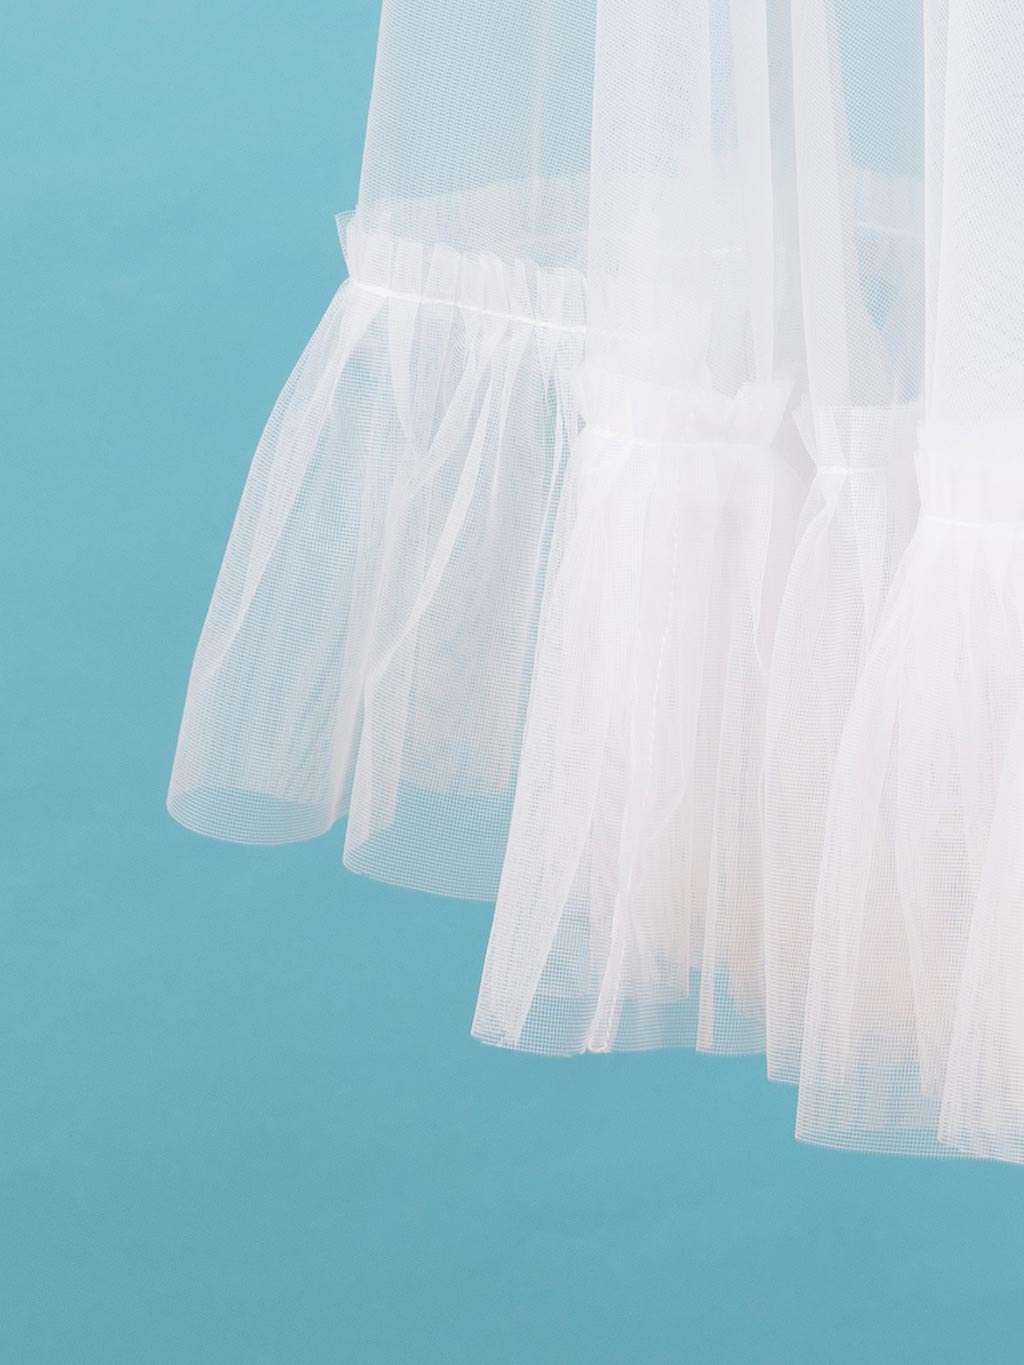 Close up of white petticoat